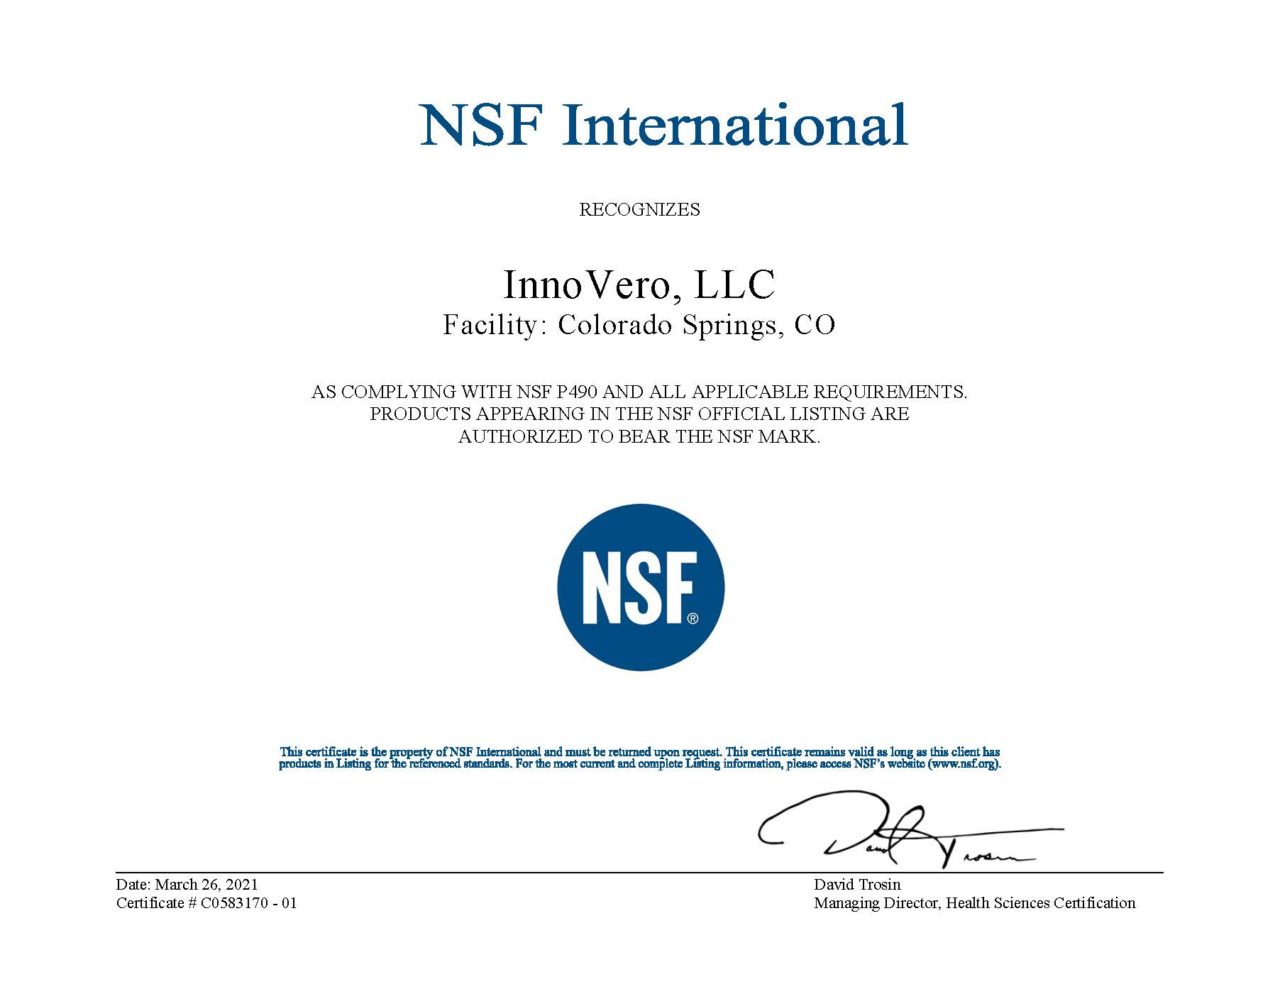 NSF certificate